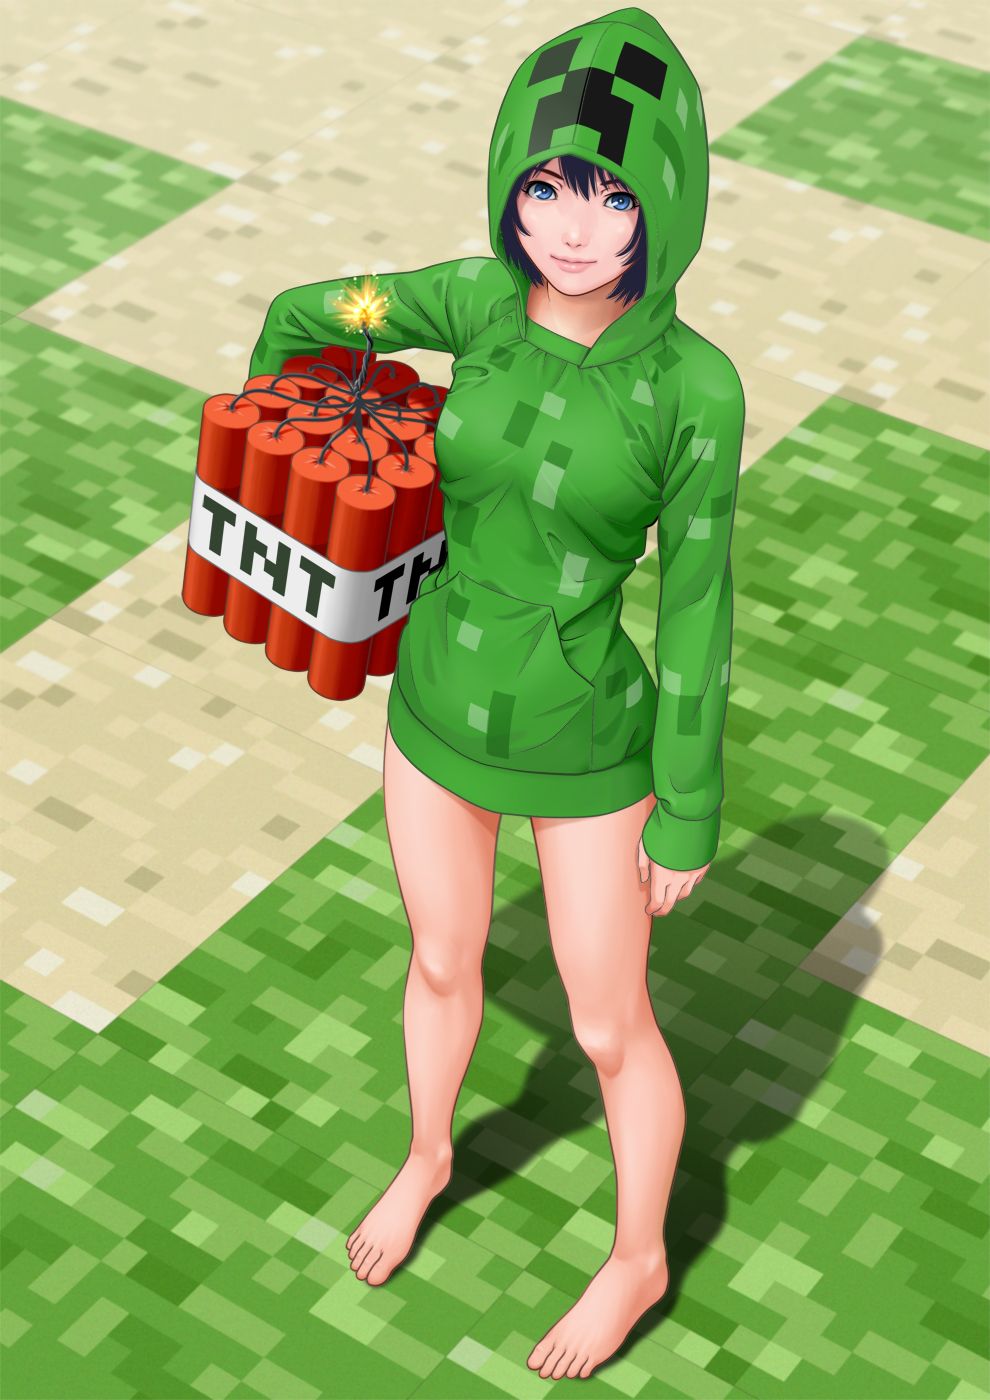 Creeper (Minecraft) Anime Image Board